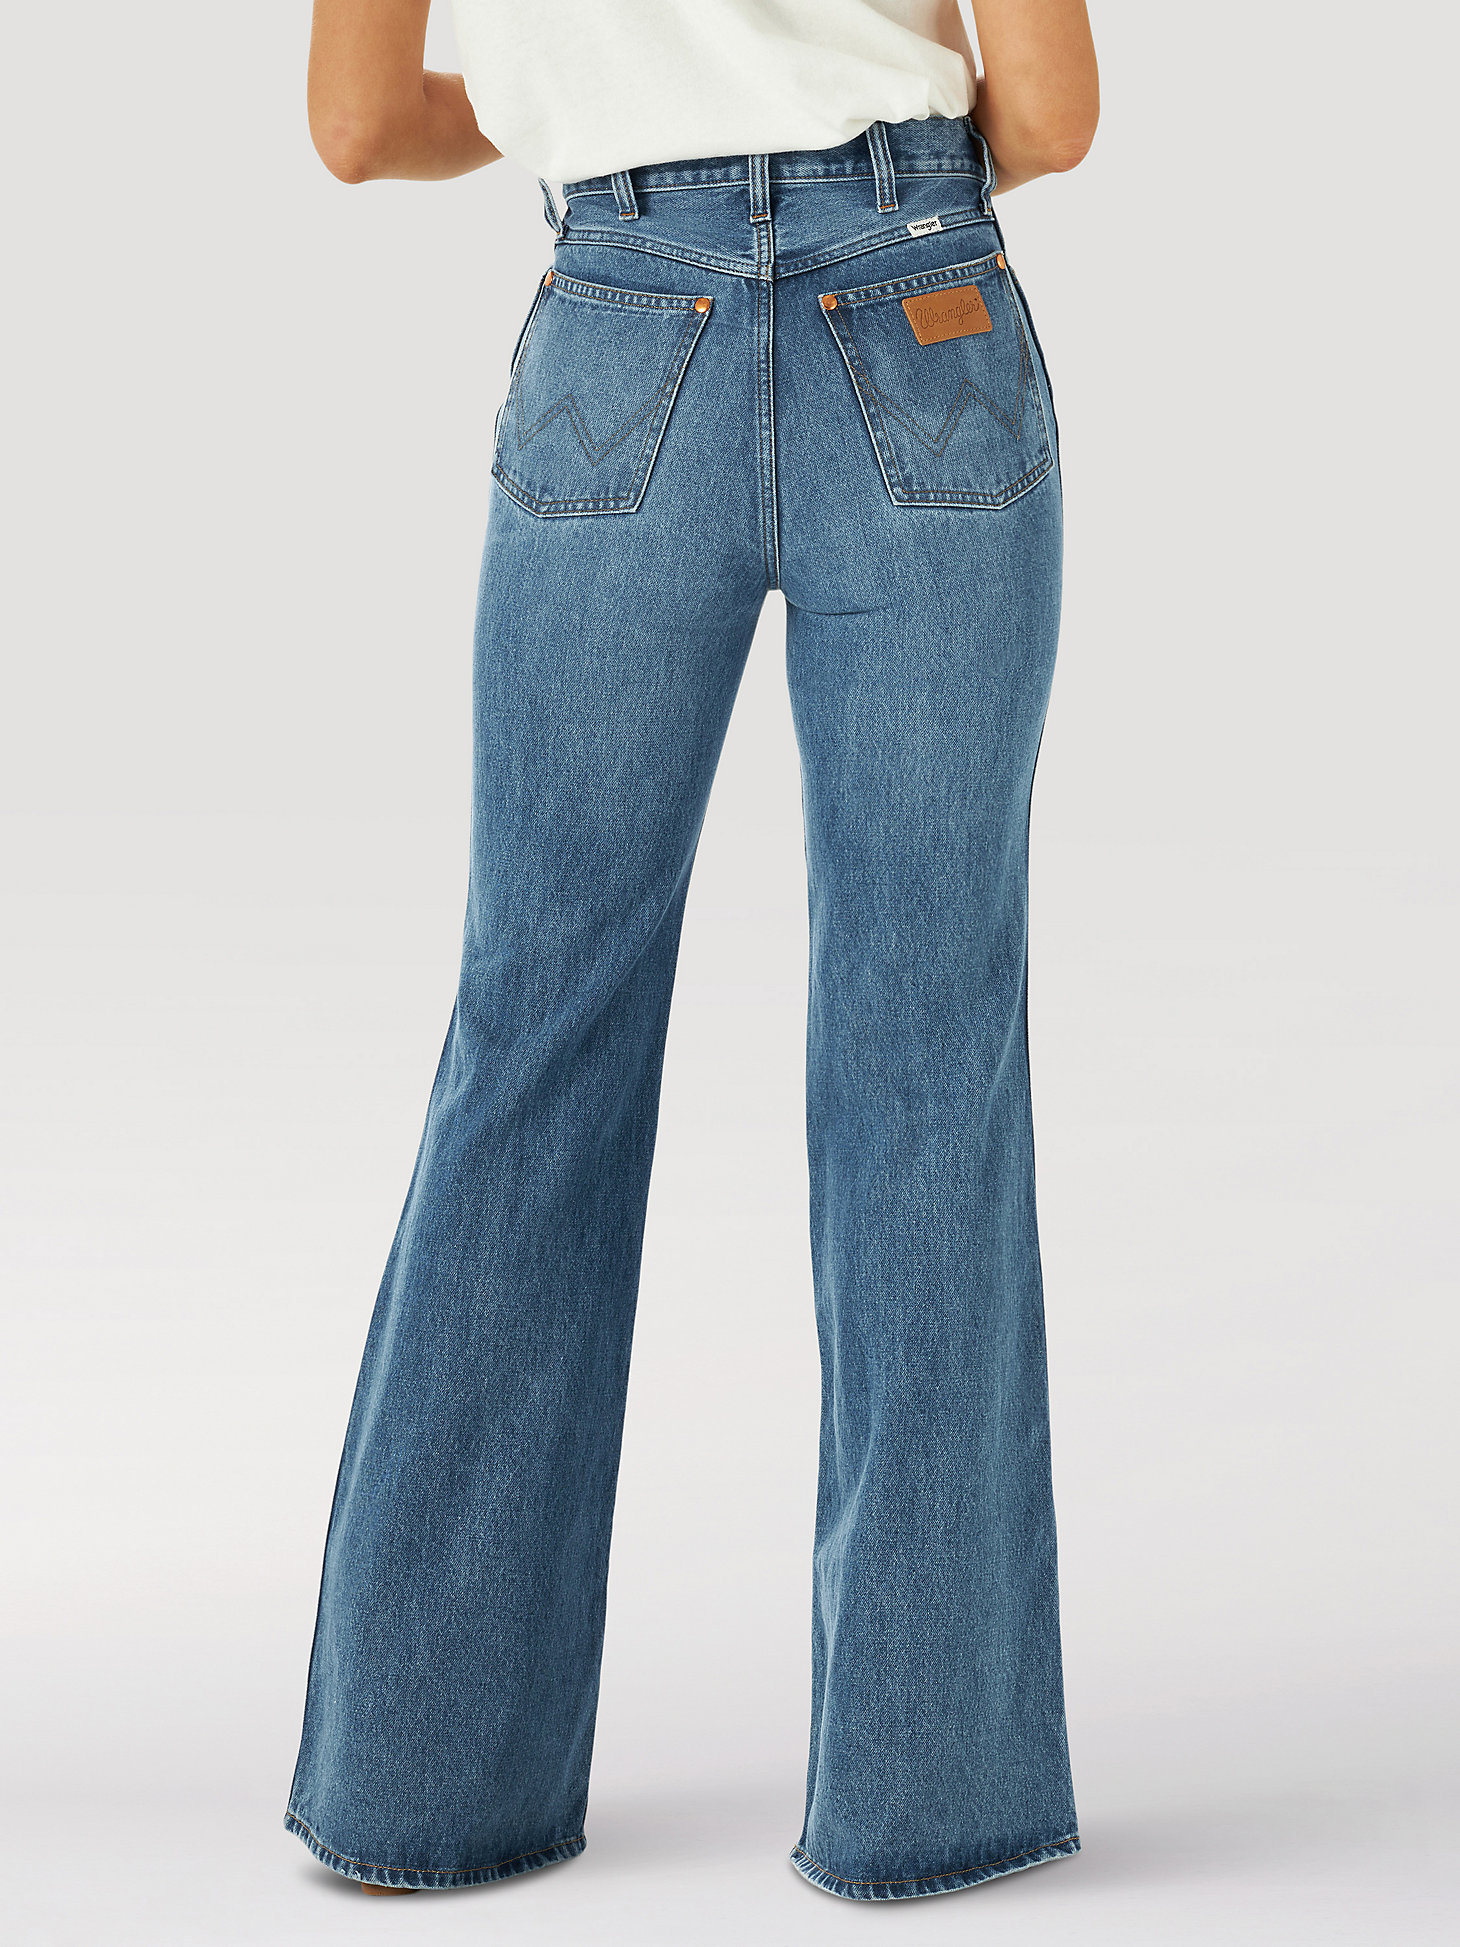 Women's Wrangler® Wanderer 622 High Rise Flare Jean in Retro Mid Damaged alternative view 1